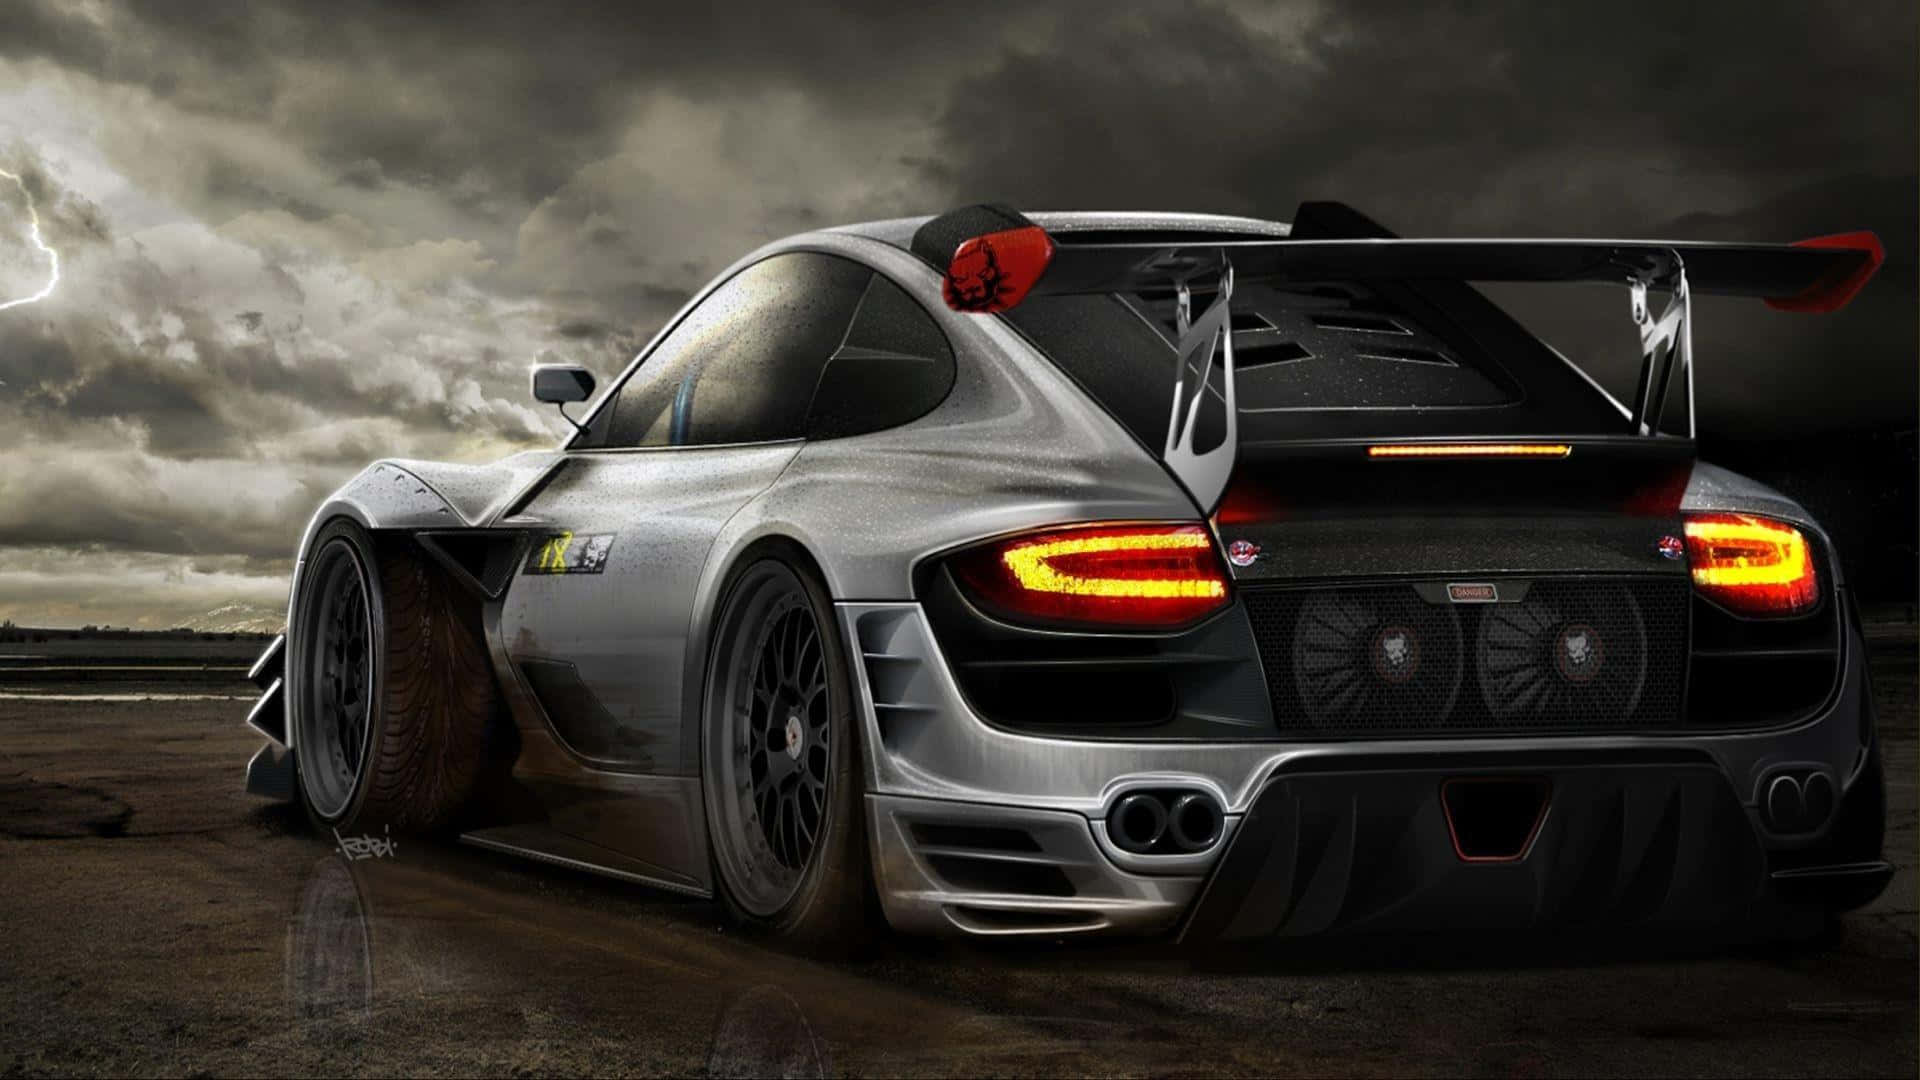 Stunning Porsche 911 Sports Car on Scenic Road